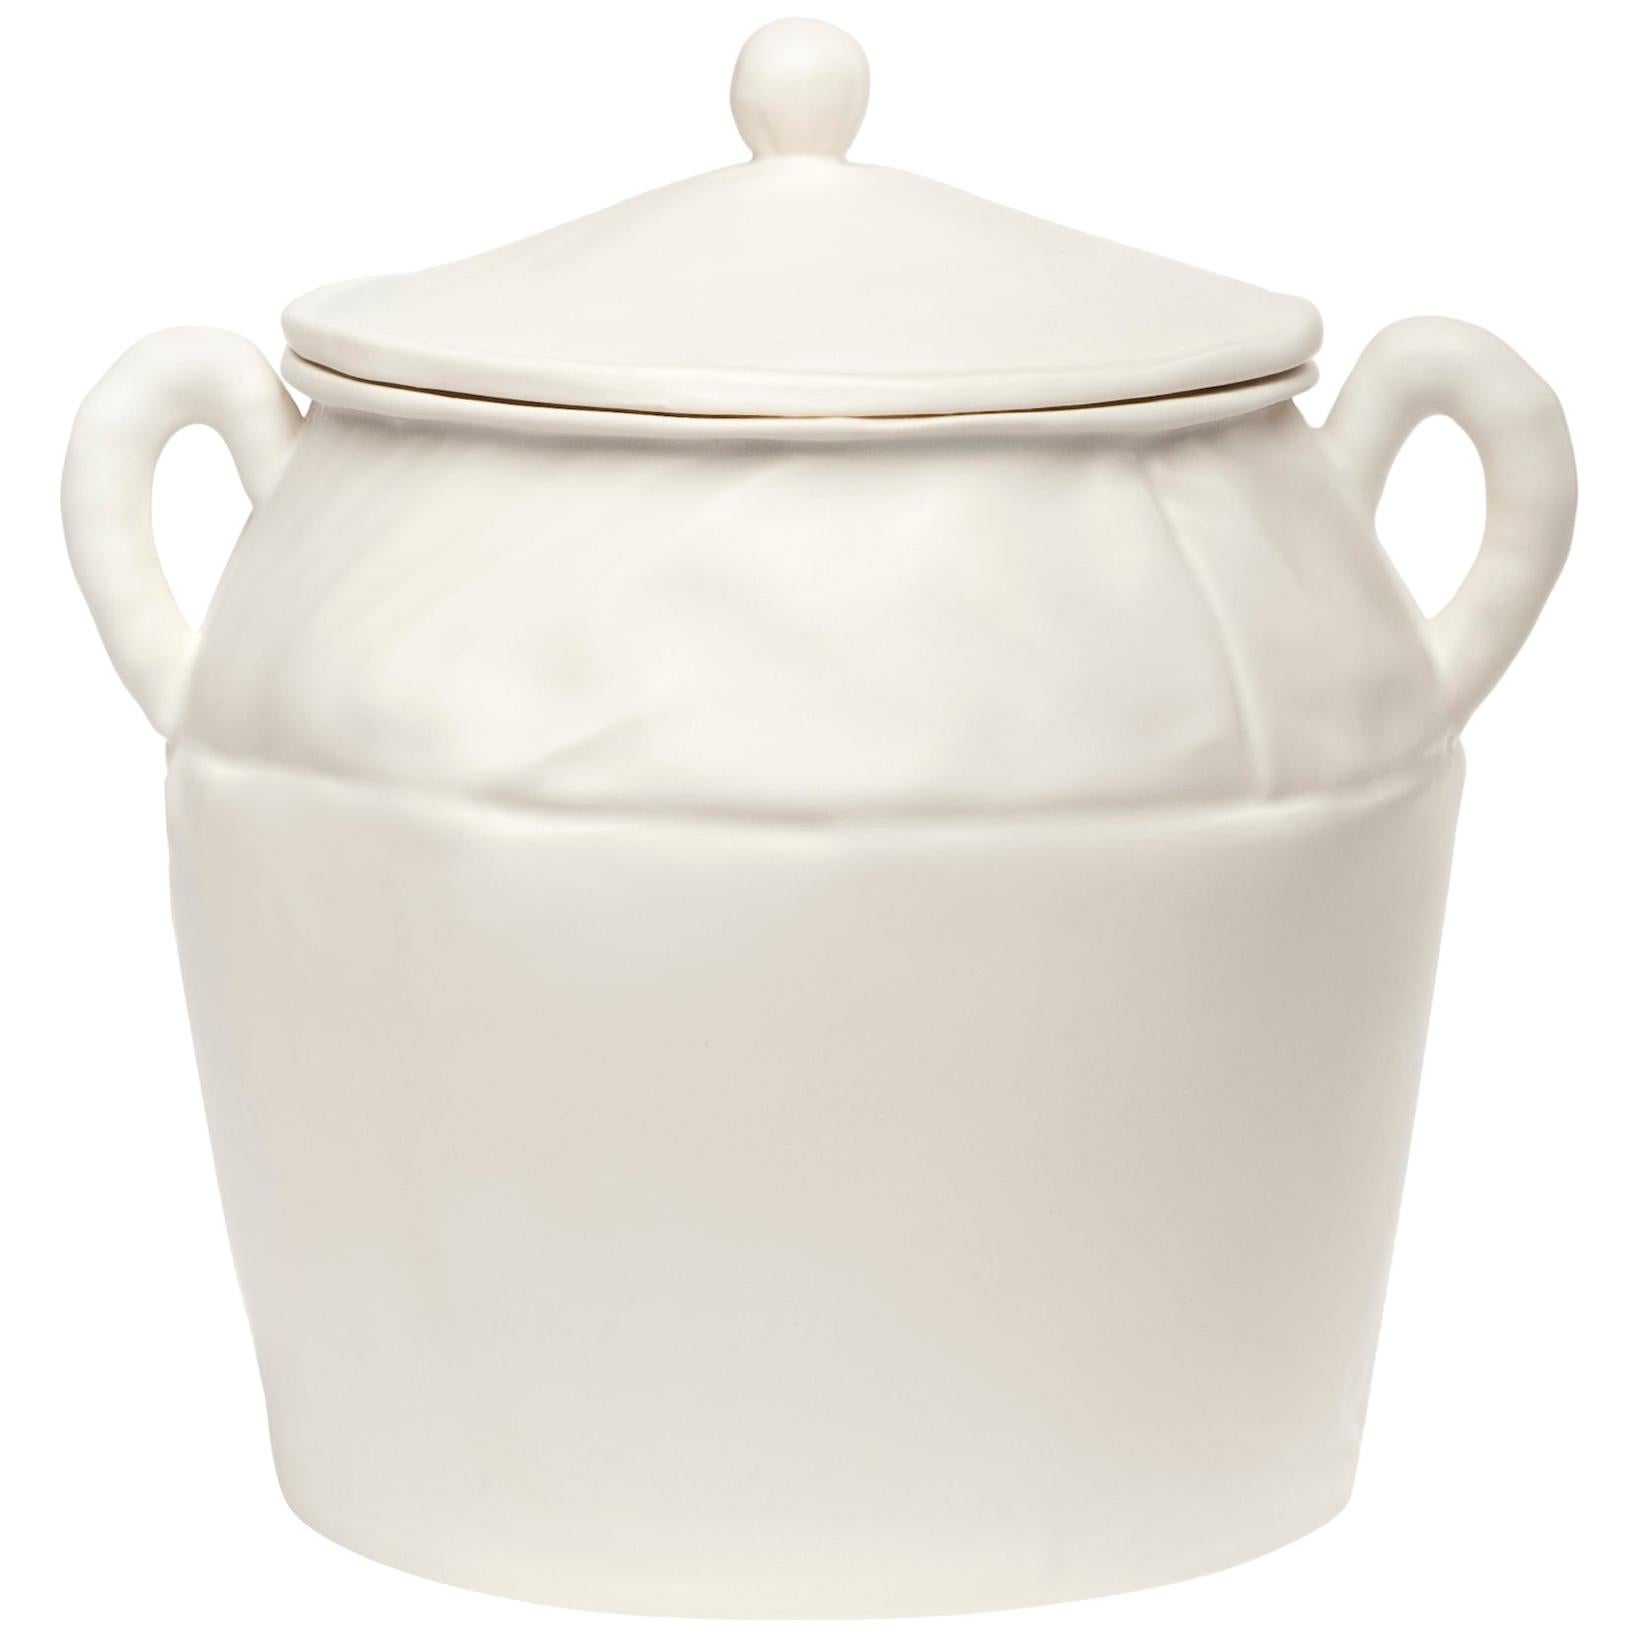 Pot mou:: Céramique blanche en vente